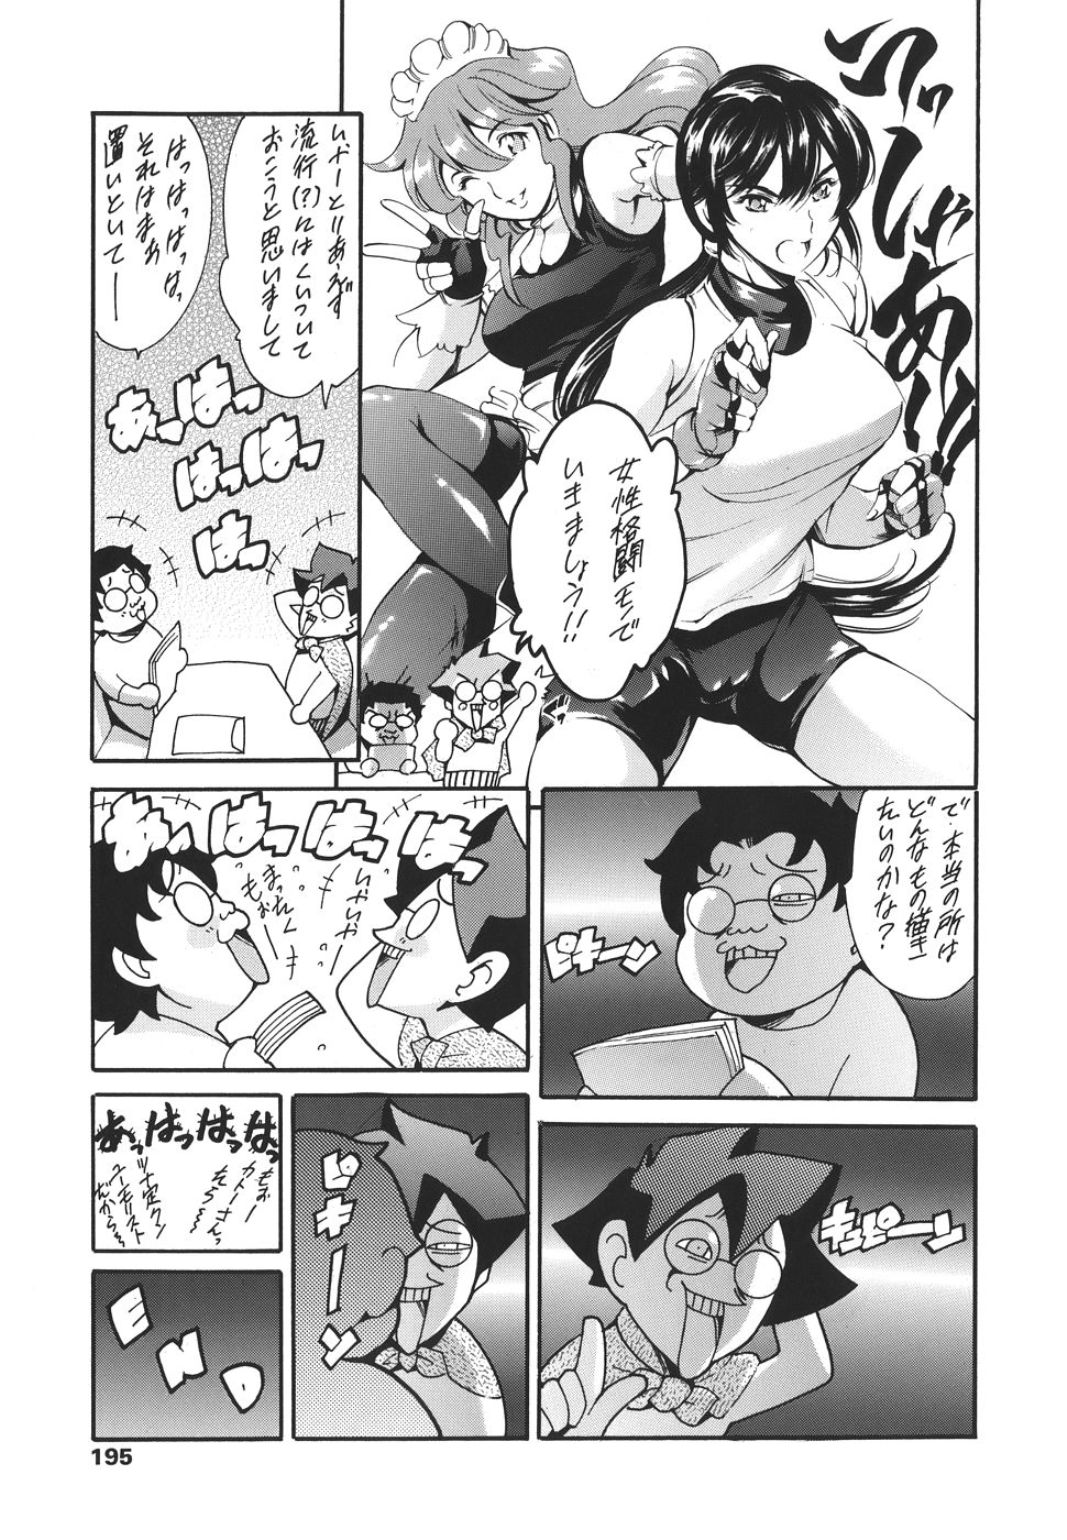 Tenma comics - Katei no Jijou English